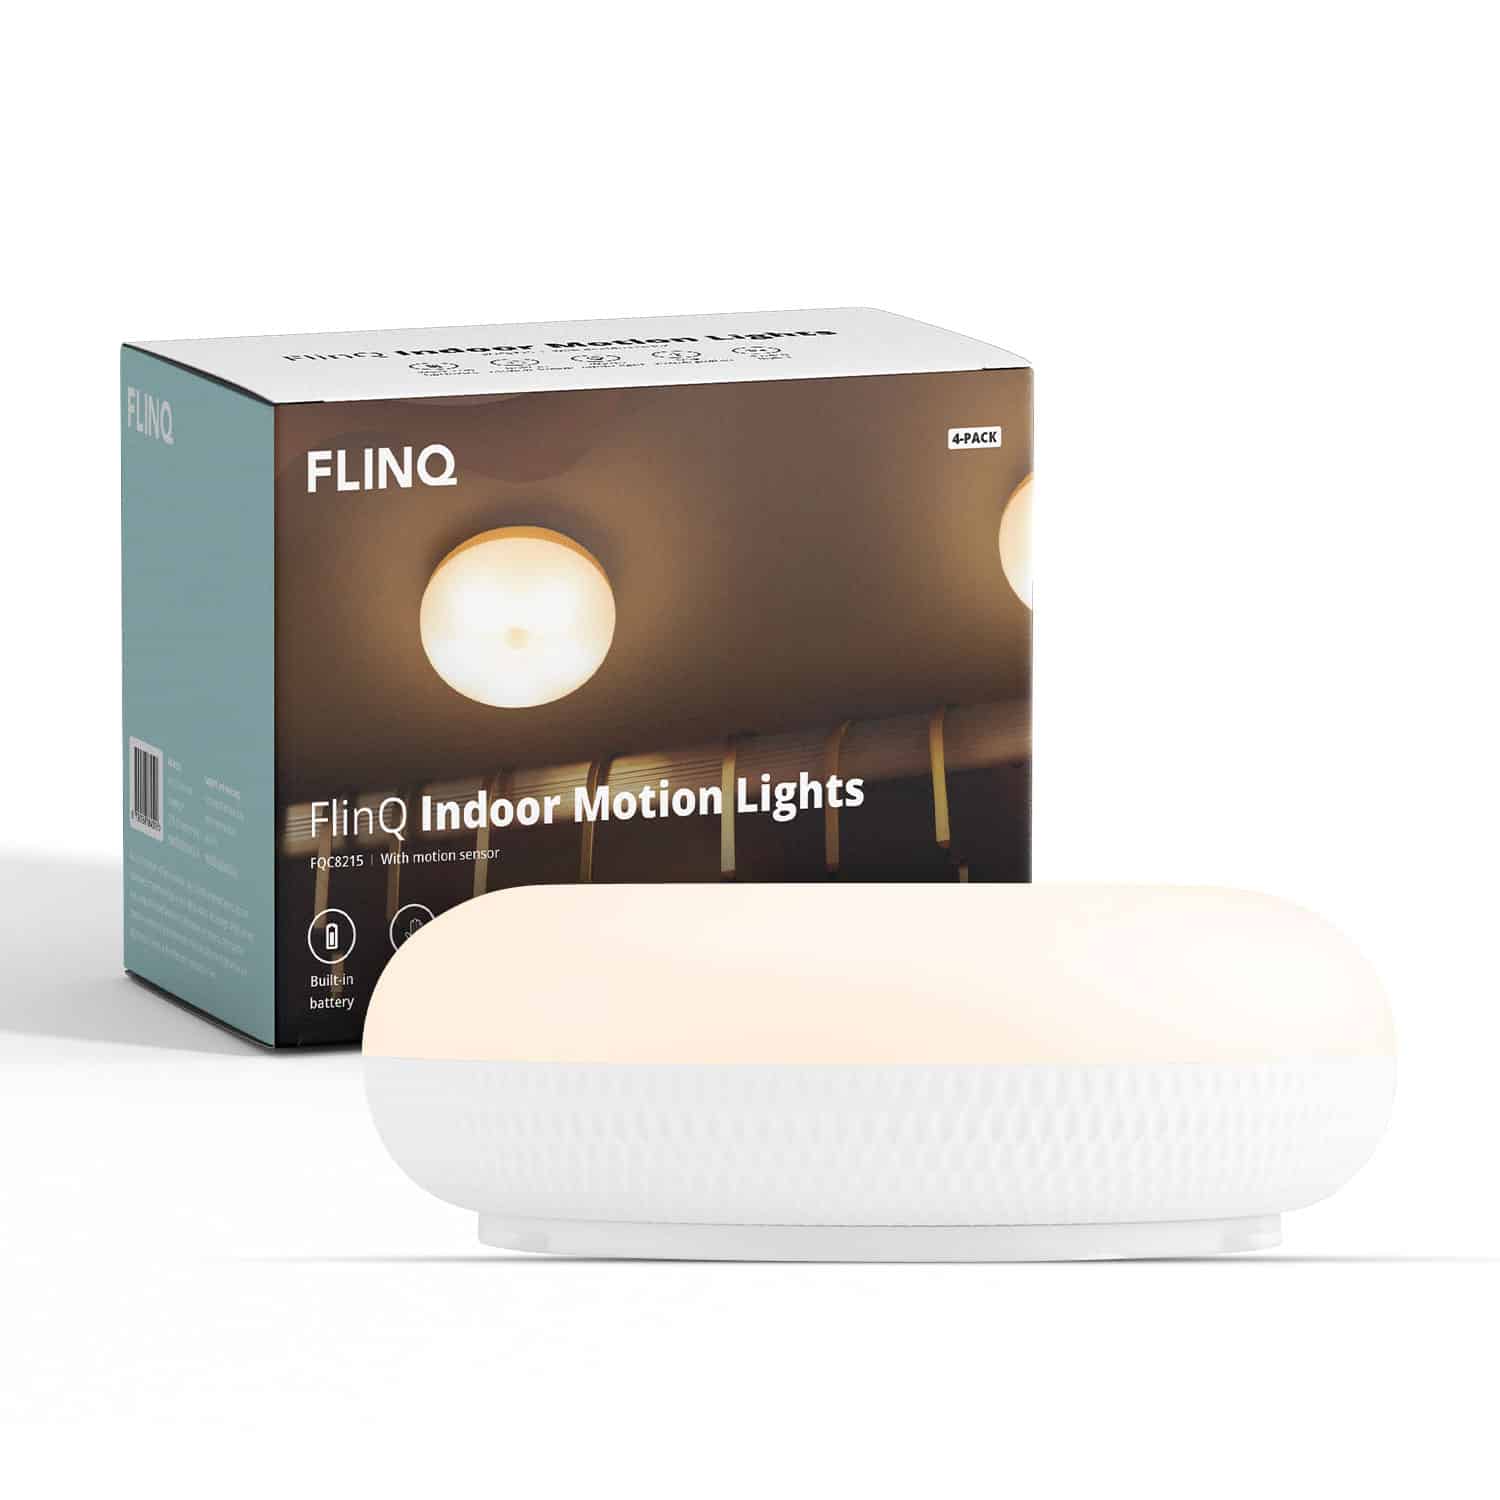 FlinQ-Indoor-Motion-Lights-1